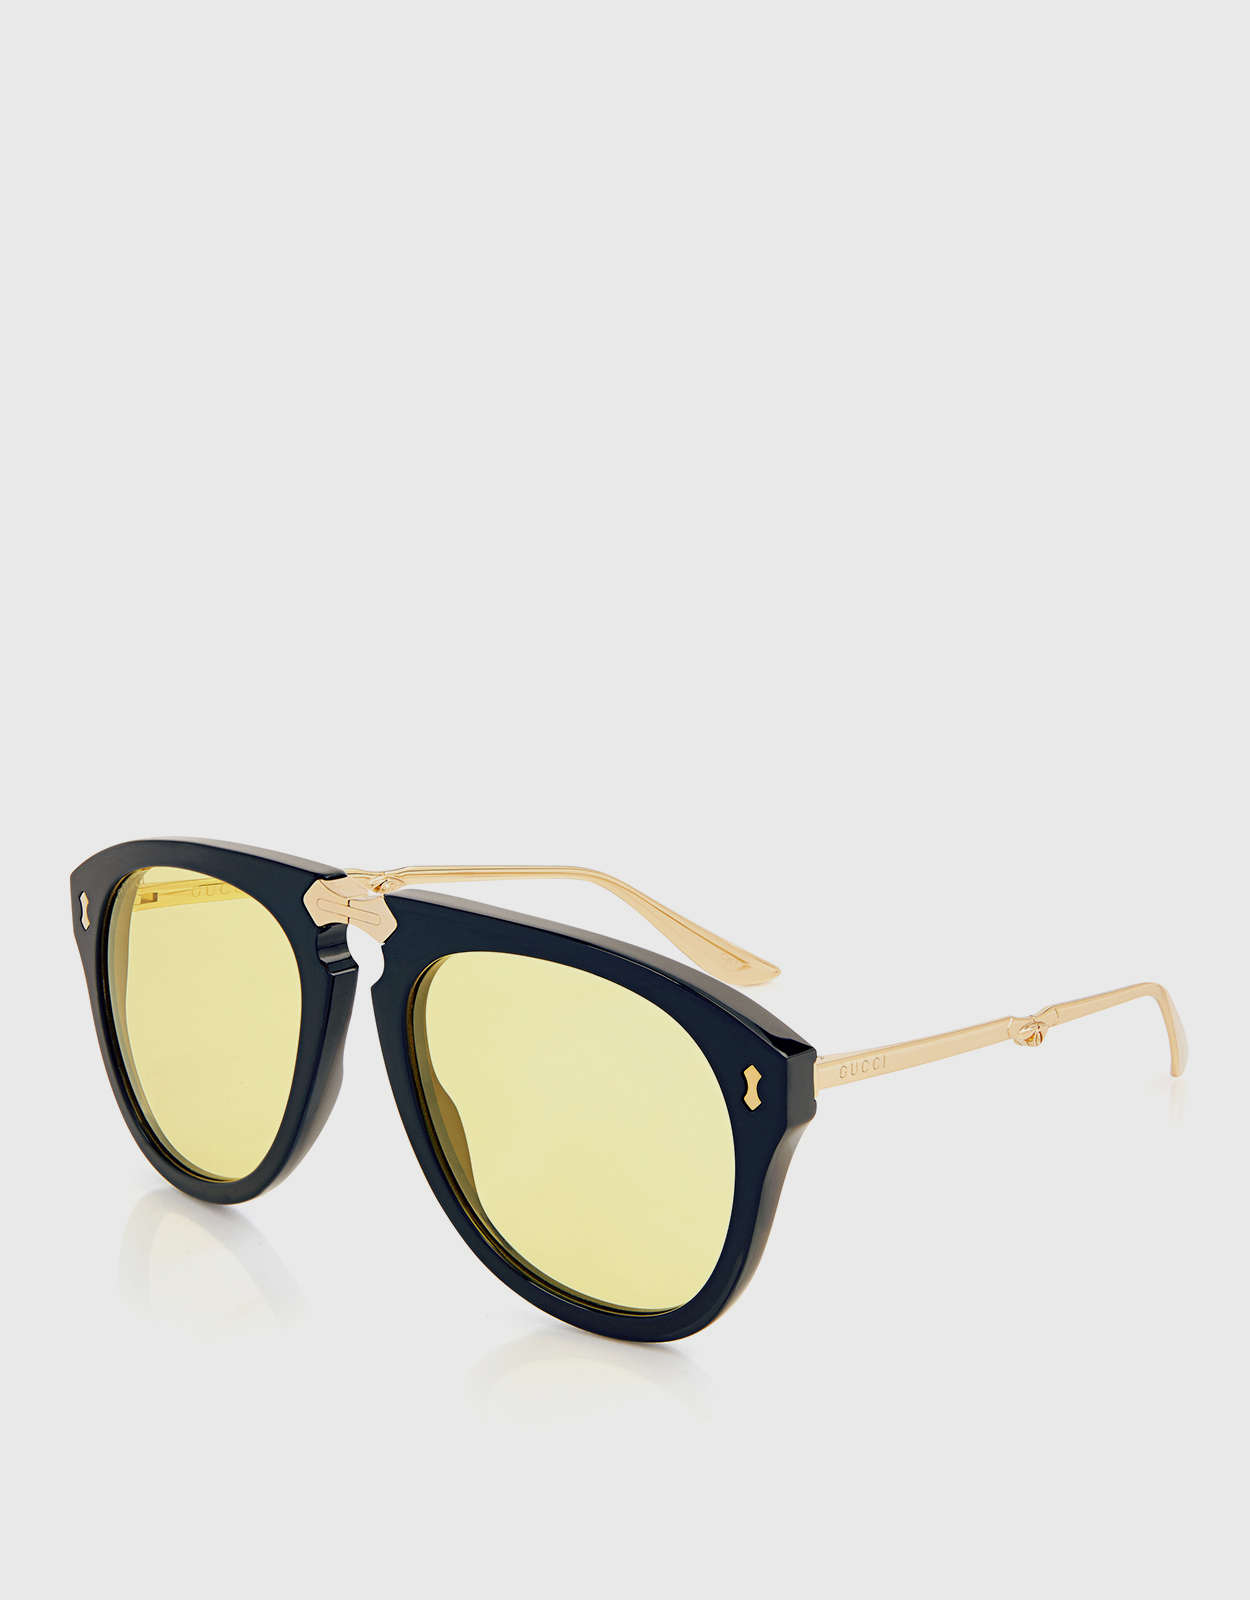 Gucci Aviator Foldable Sunglasses (Sunglasses,Aviator) 